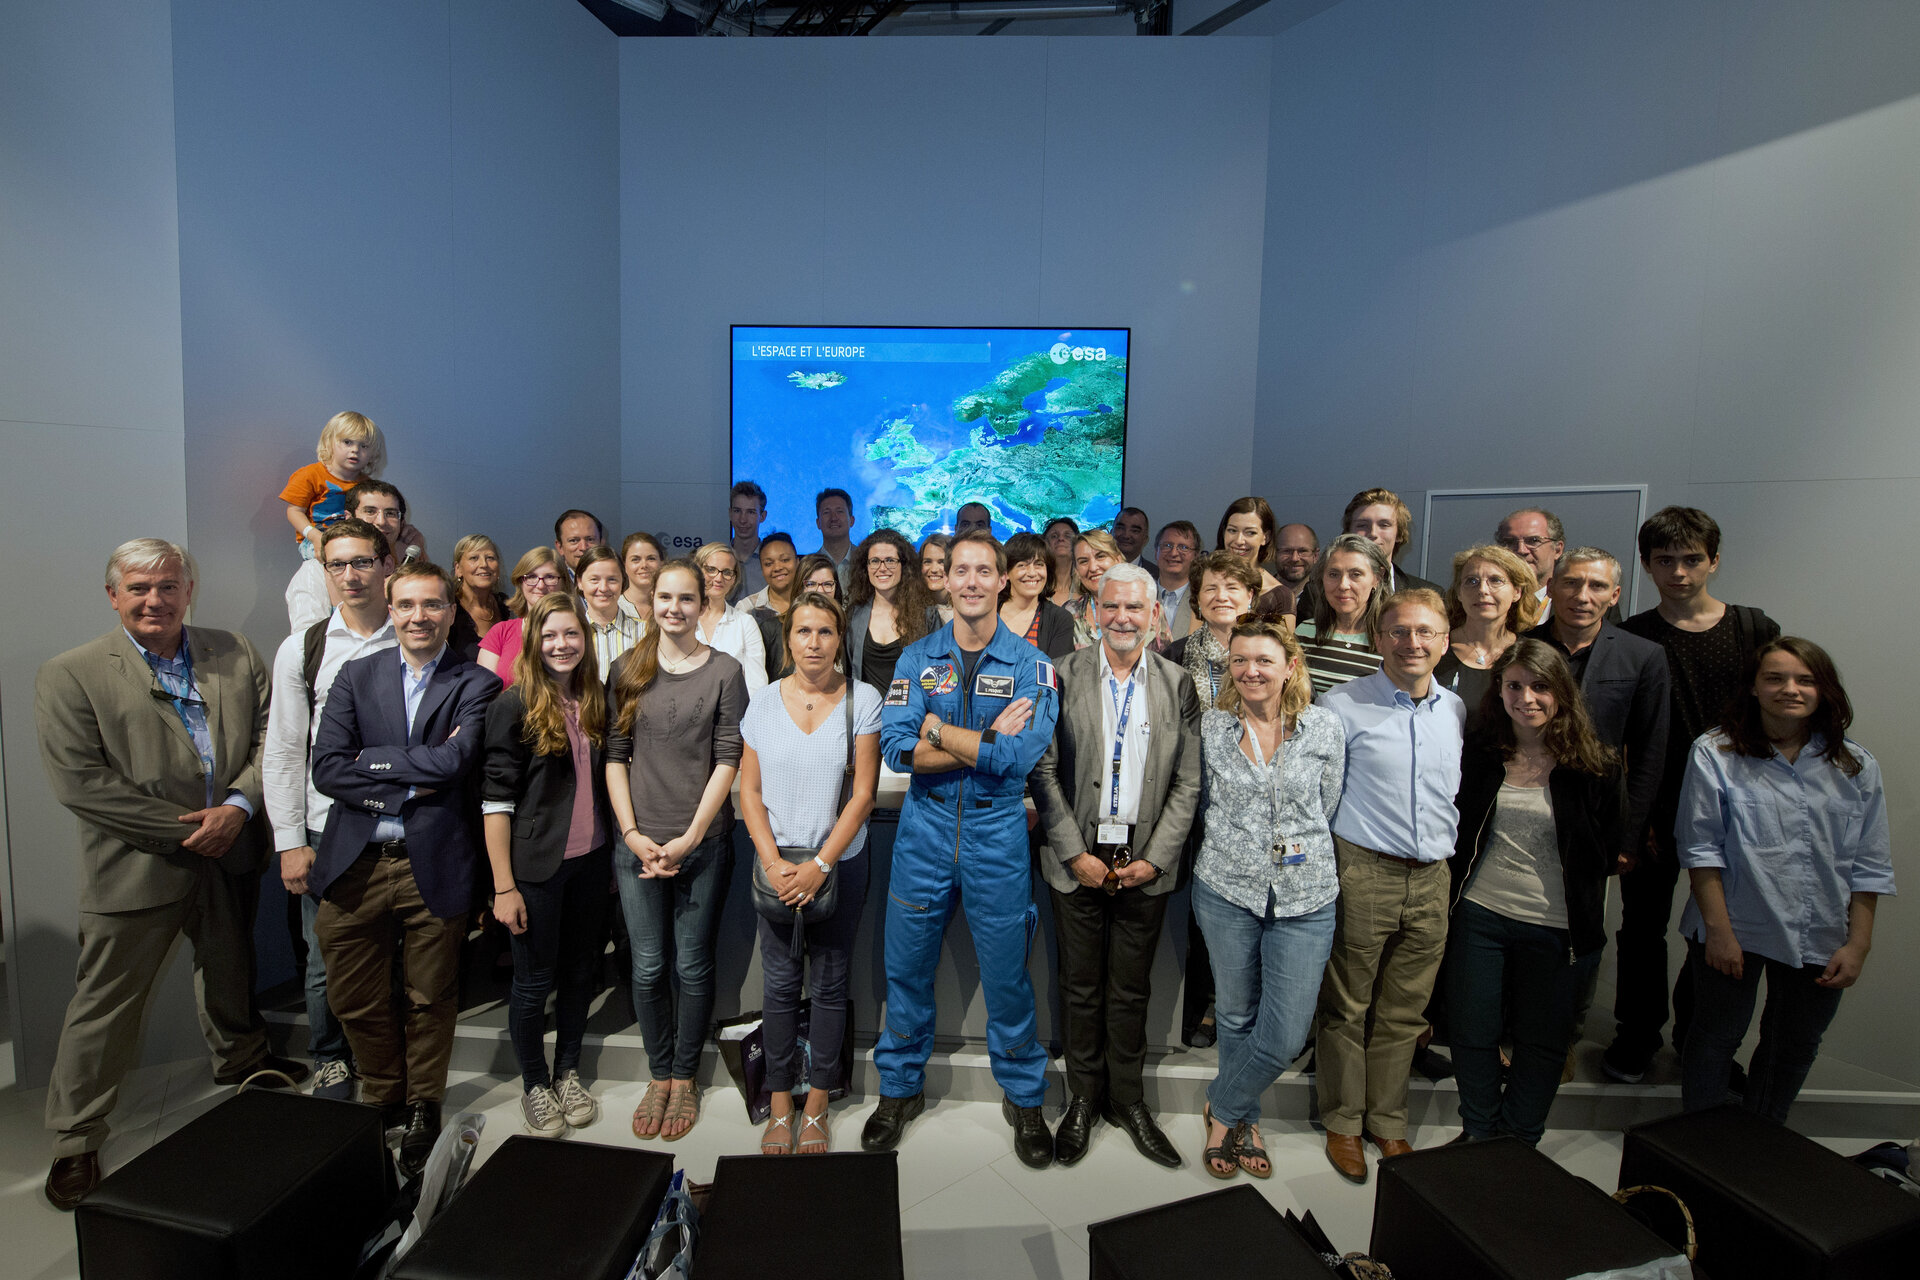 ESA staffs and ESA astronaut Thomas Pesquet